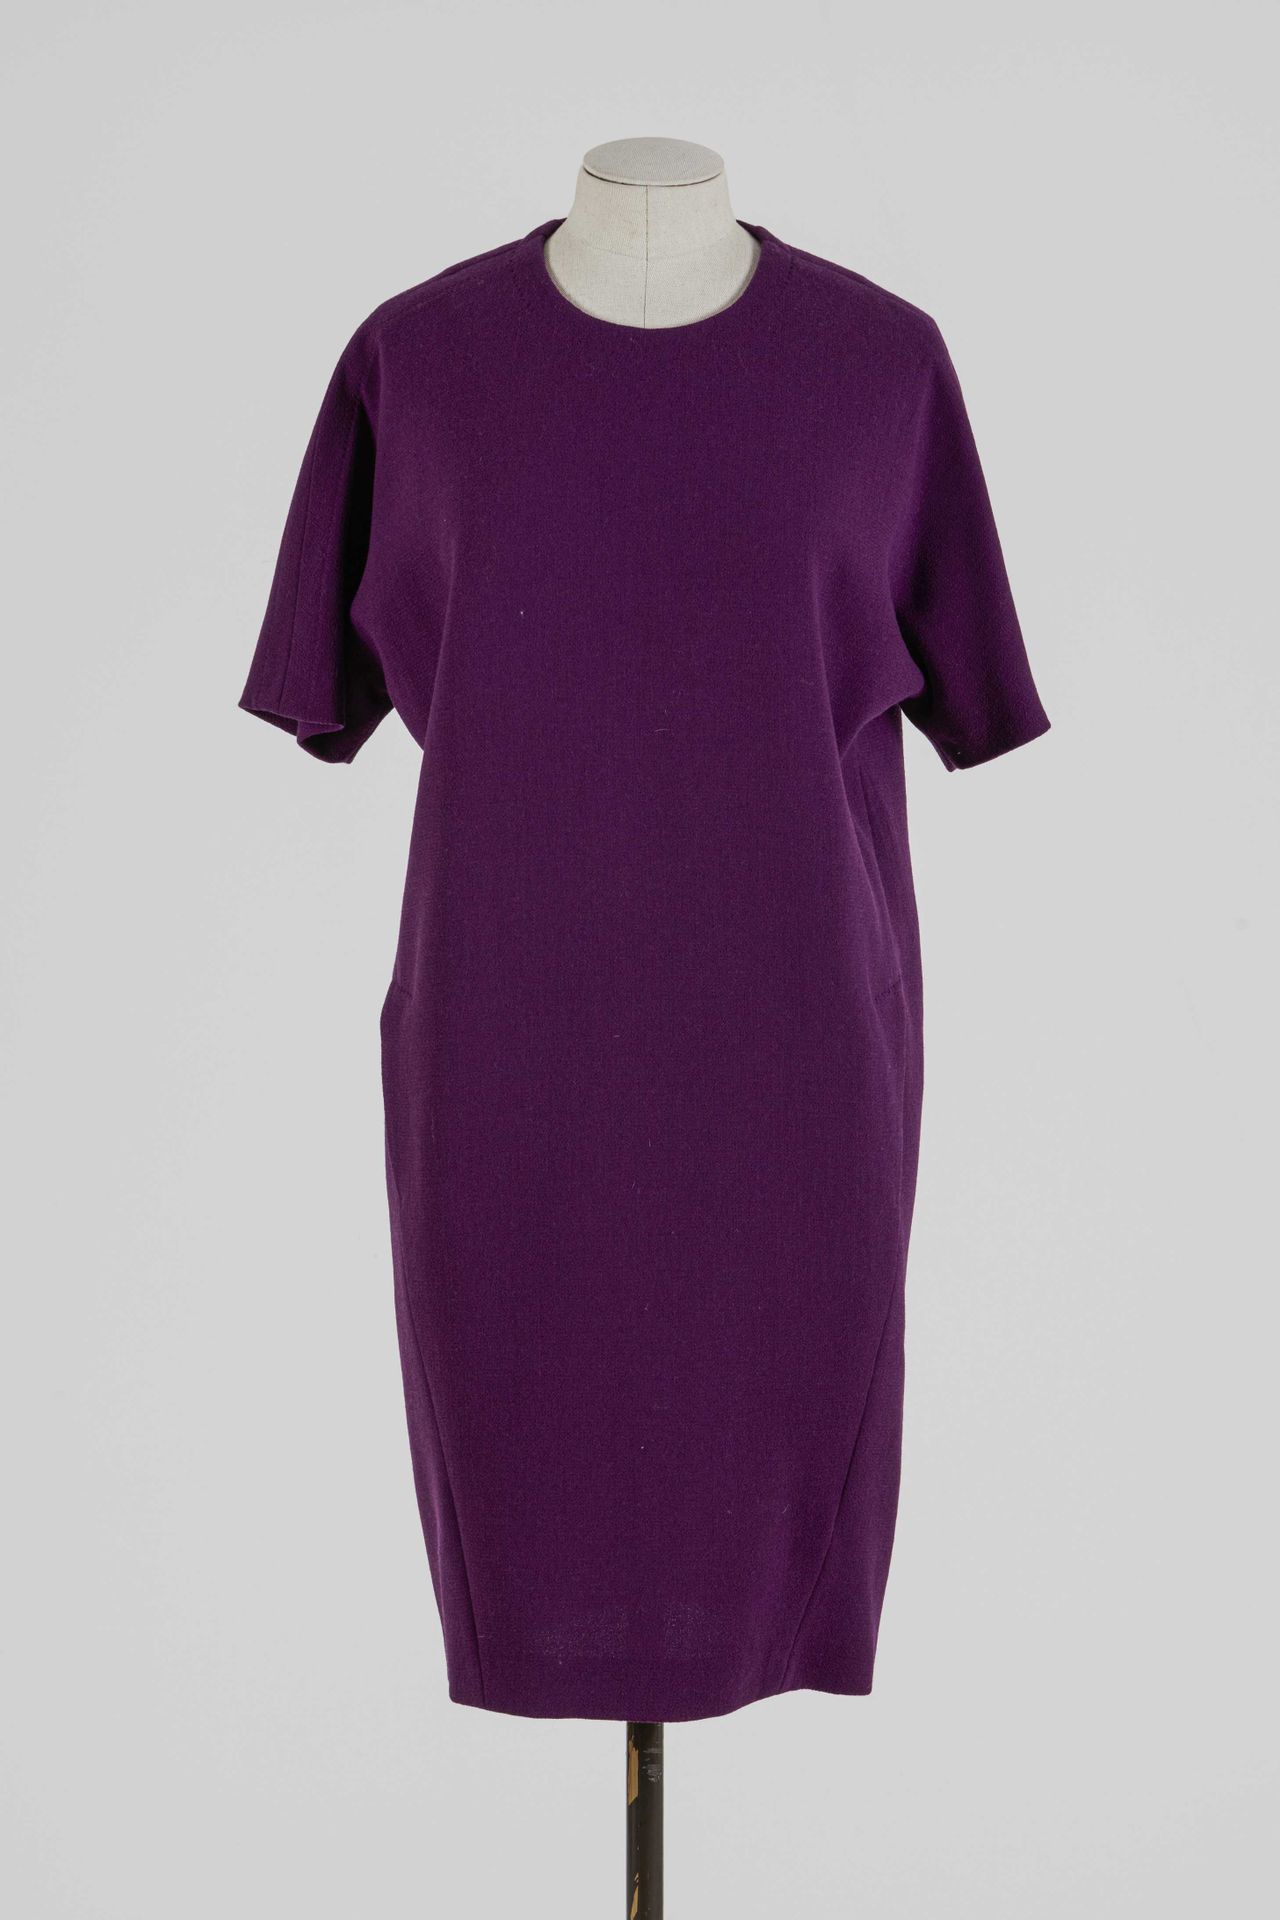 Null ESCADA : straight mid-length dress in aubergine wool, round neck, short sle&hellip;